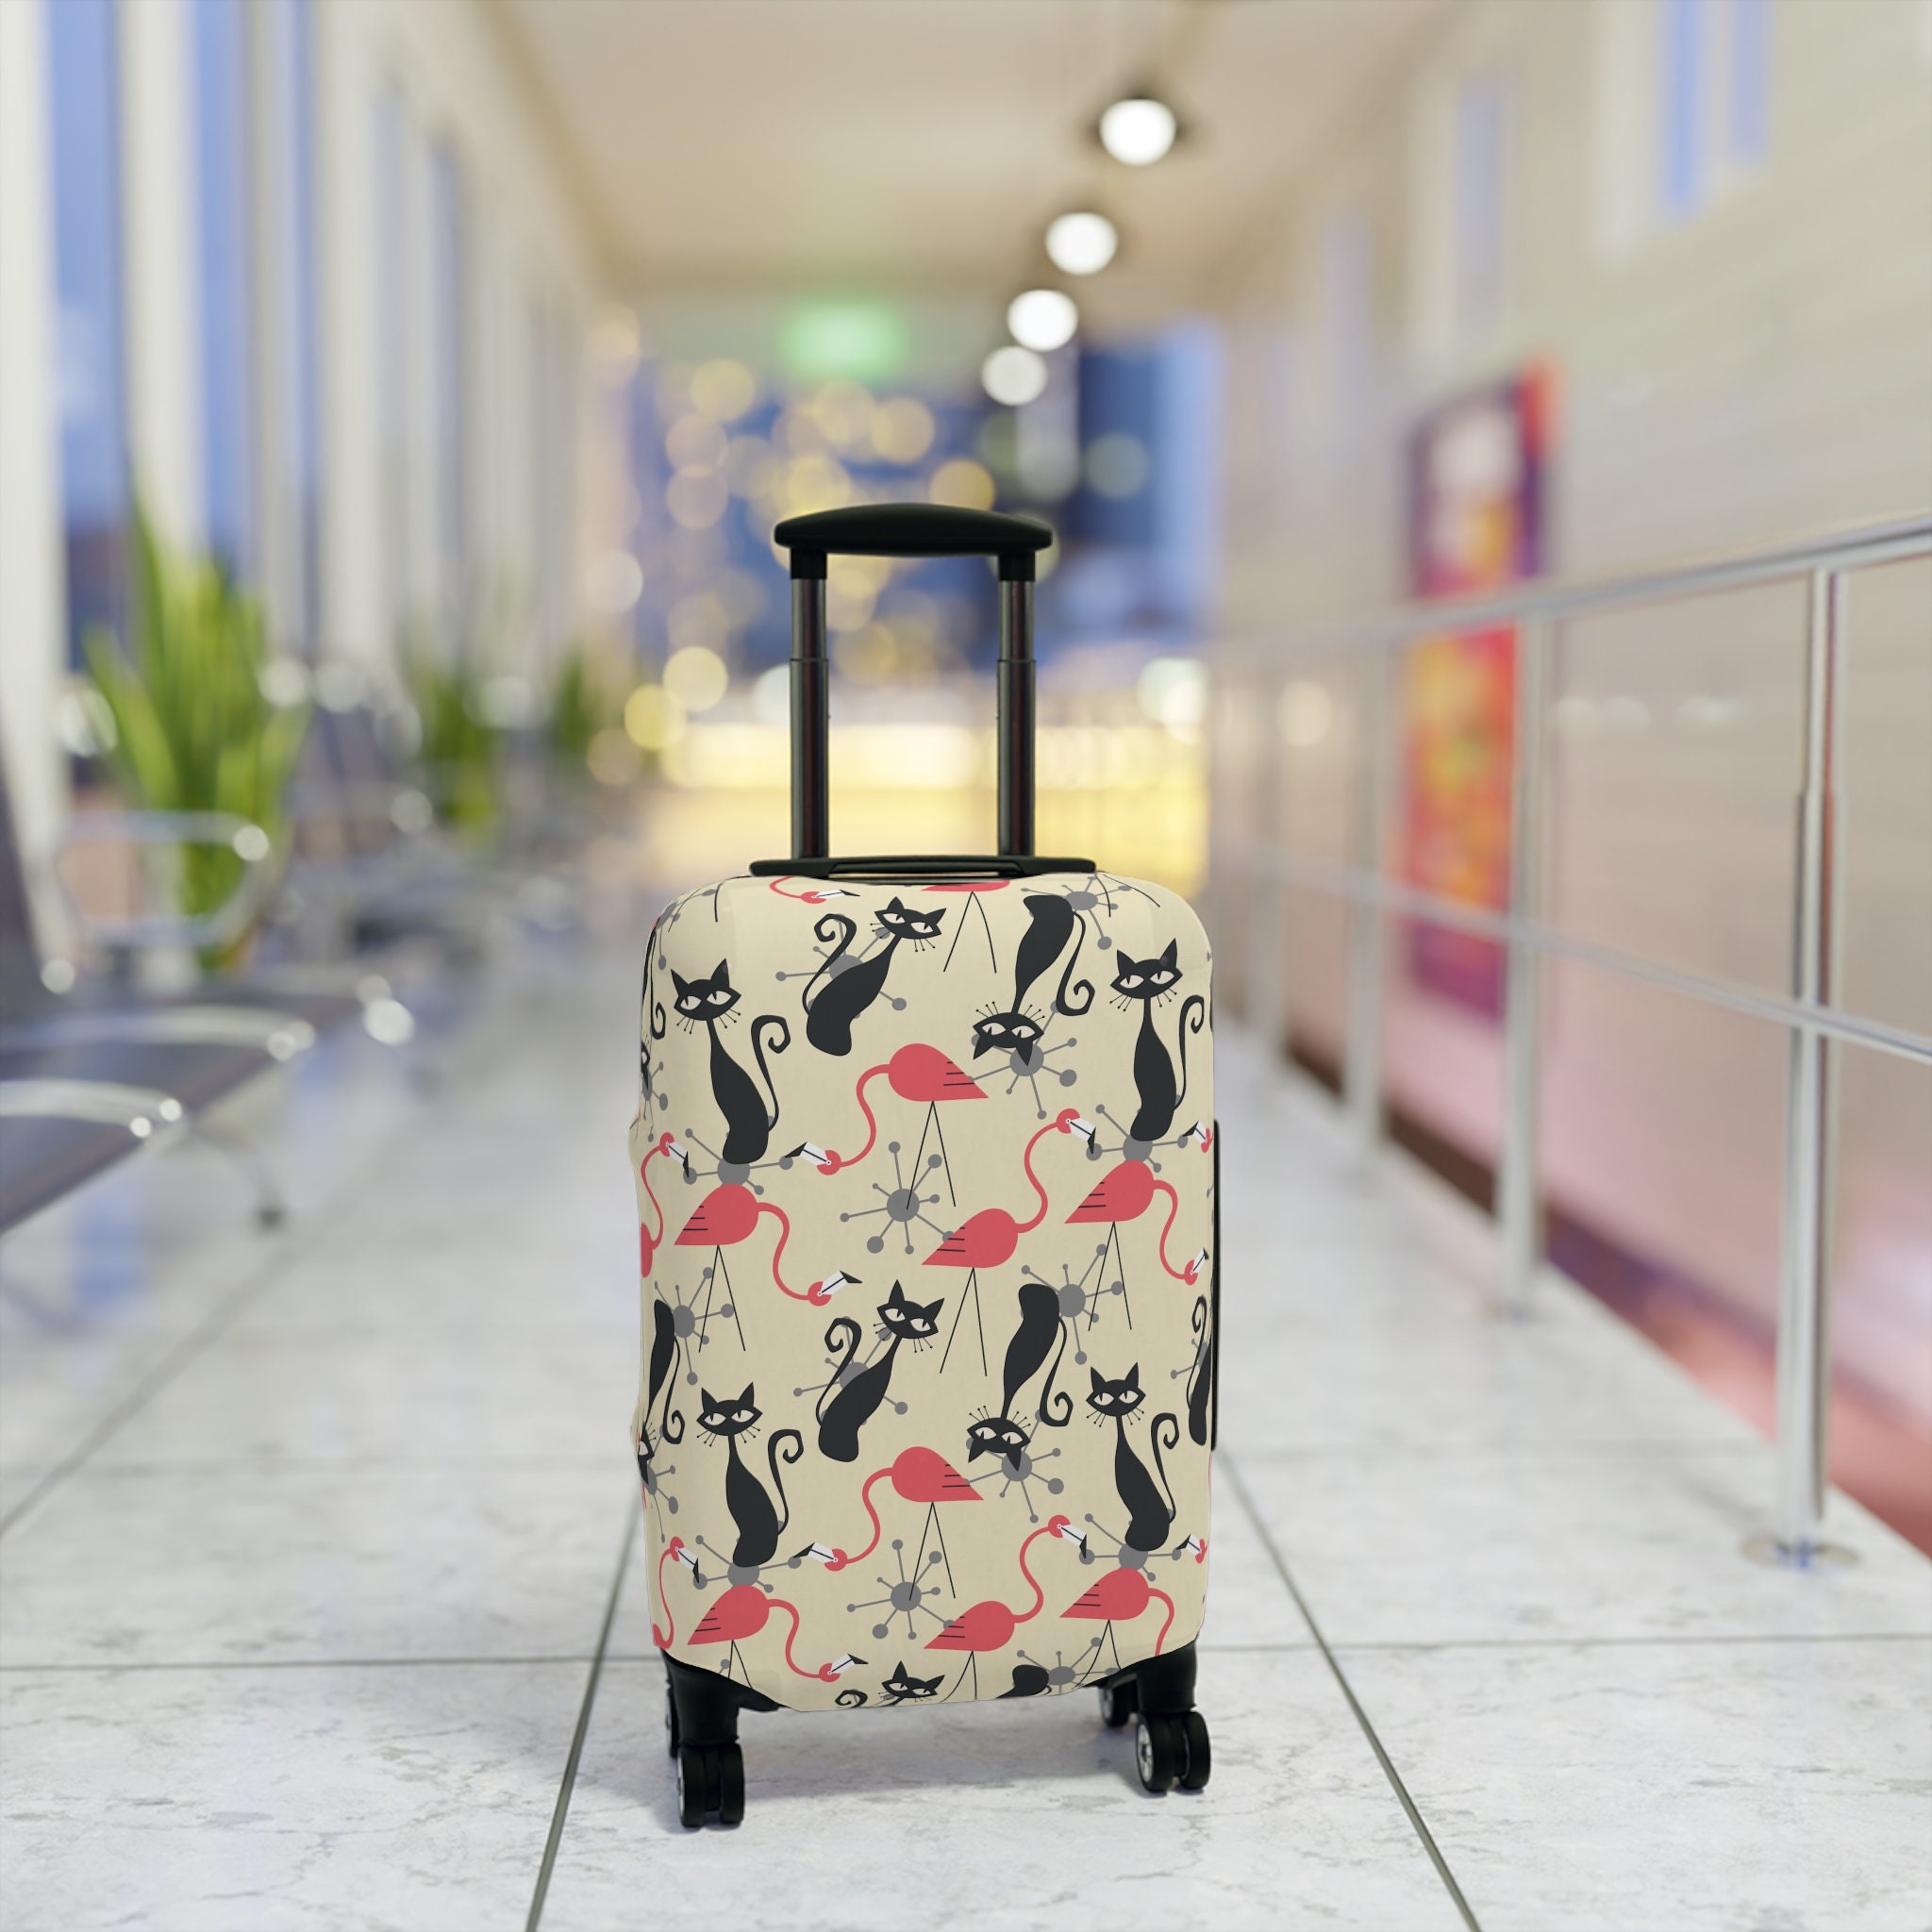 Atomic Cat, Flamingo Mid Century Modern Luggage Cover, Retro Whimsy MCM Starburst Cream, Pink, Gray Suitcase Protector